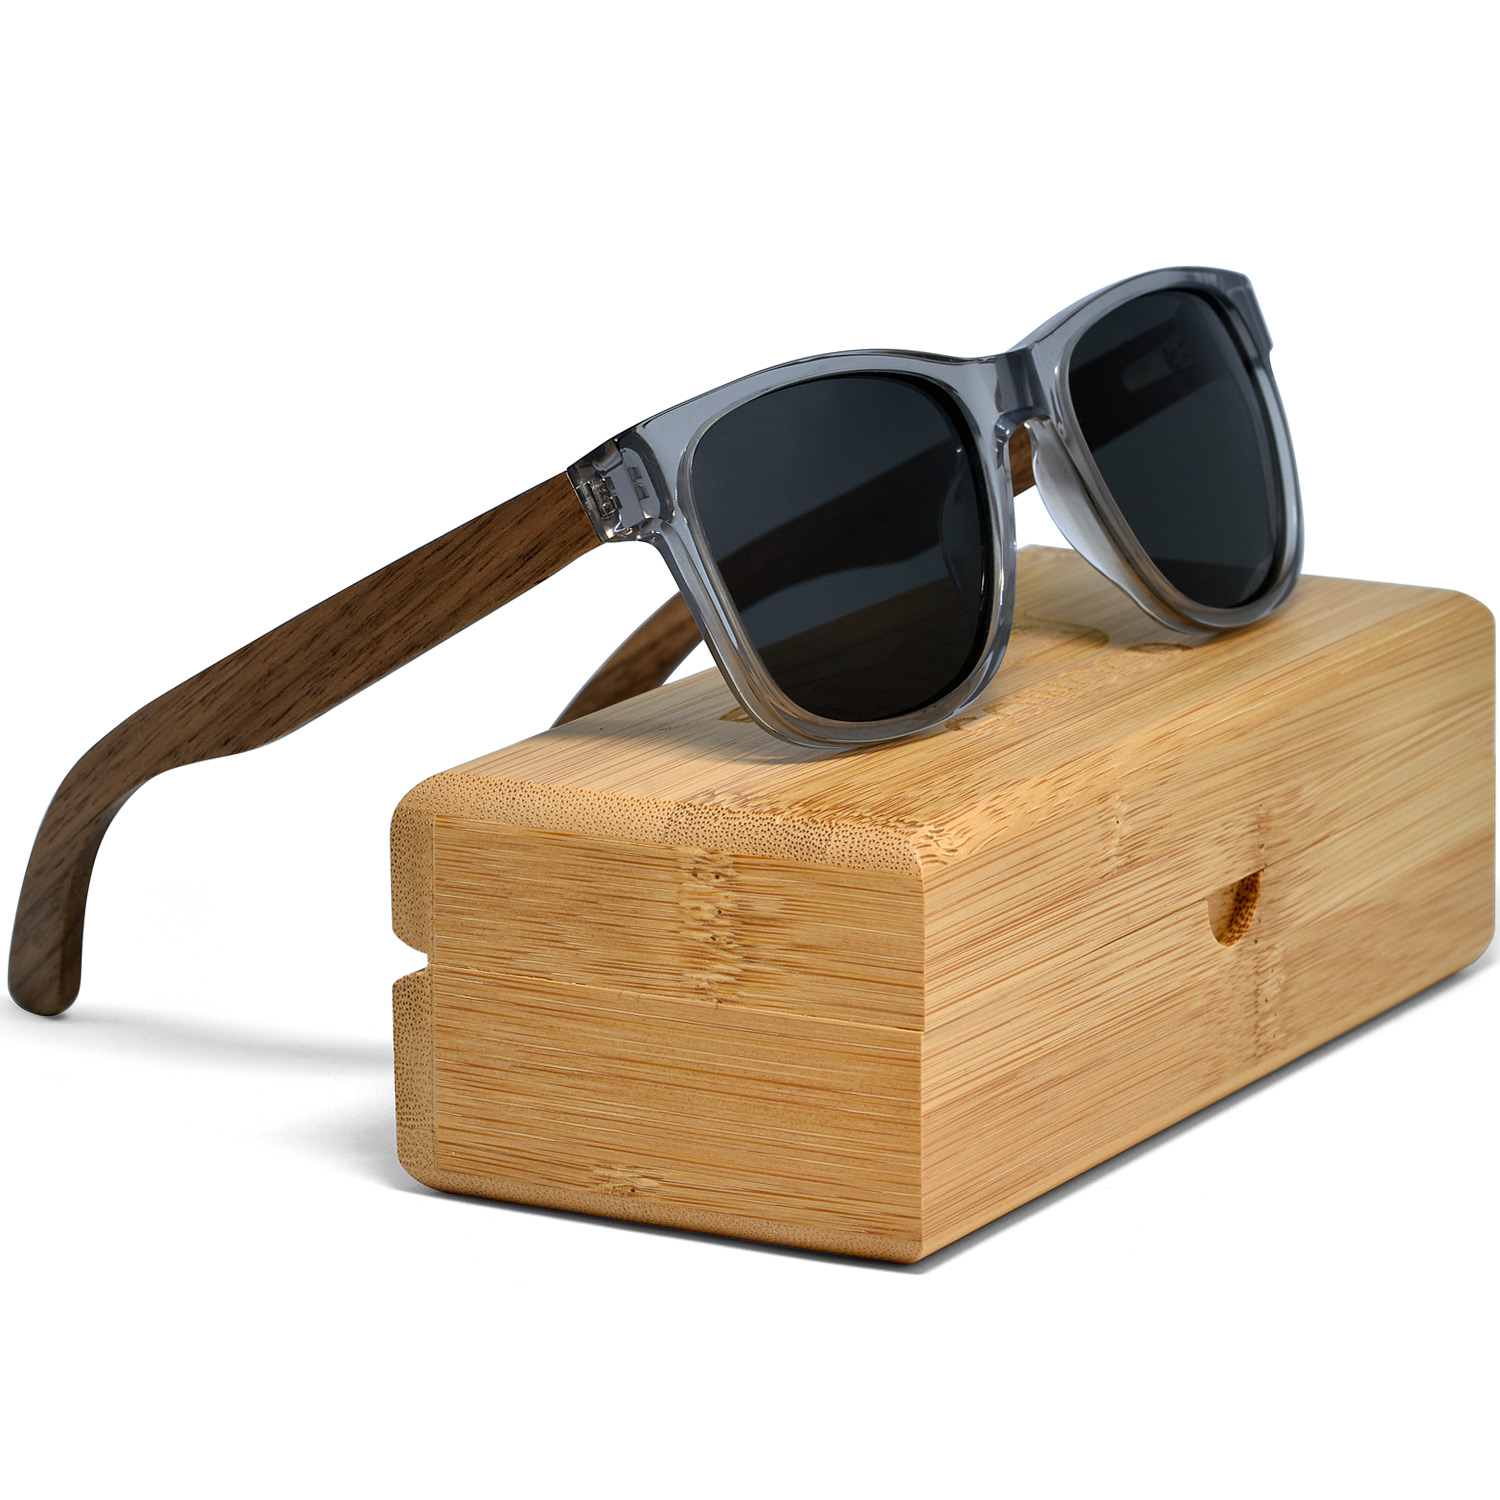 Walnut wood sunglasses classic style transparent frame bamboo box